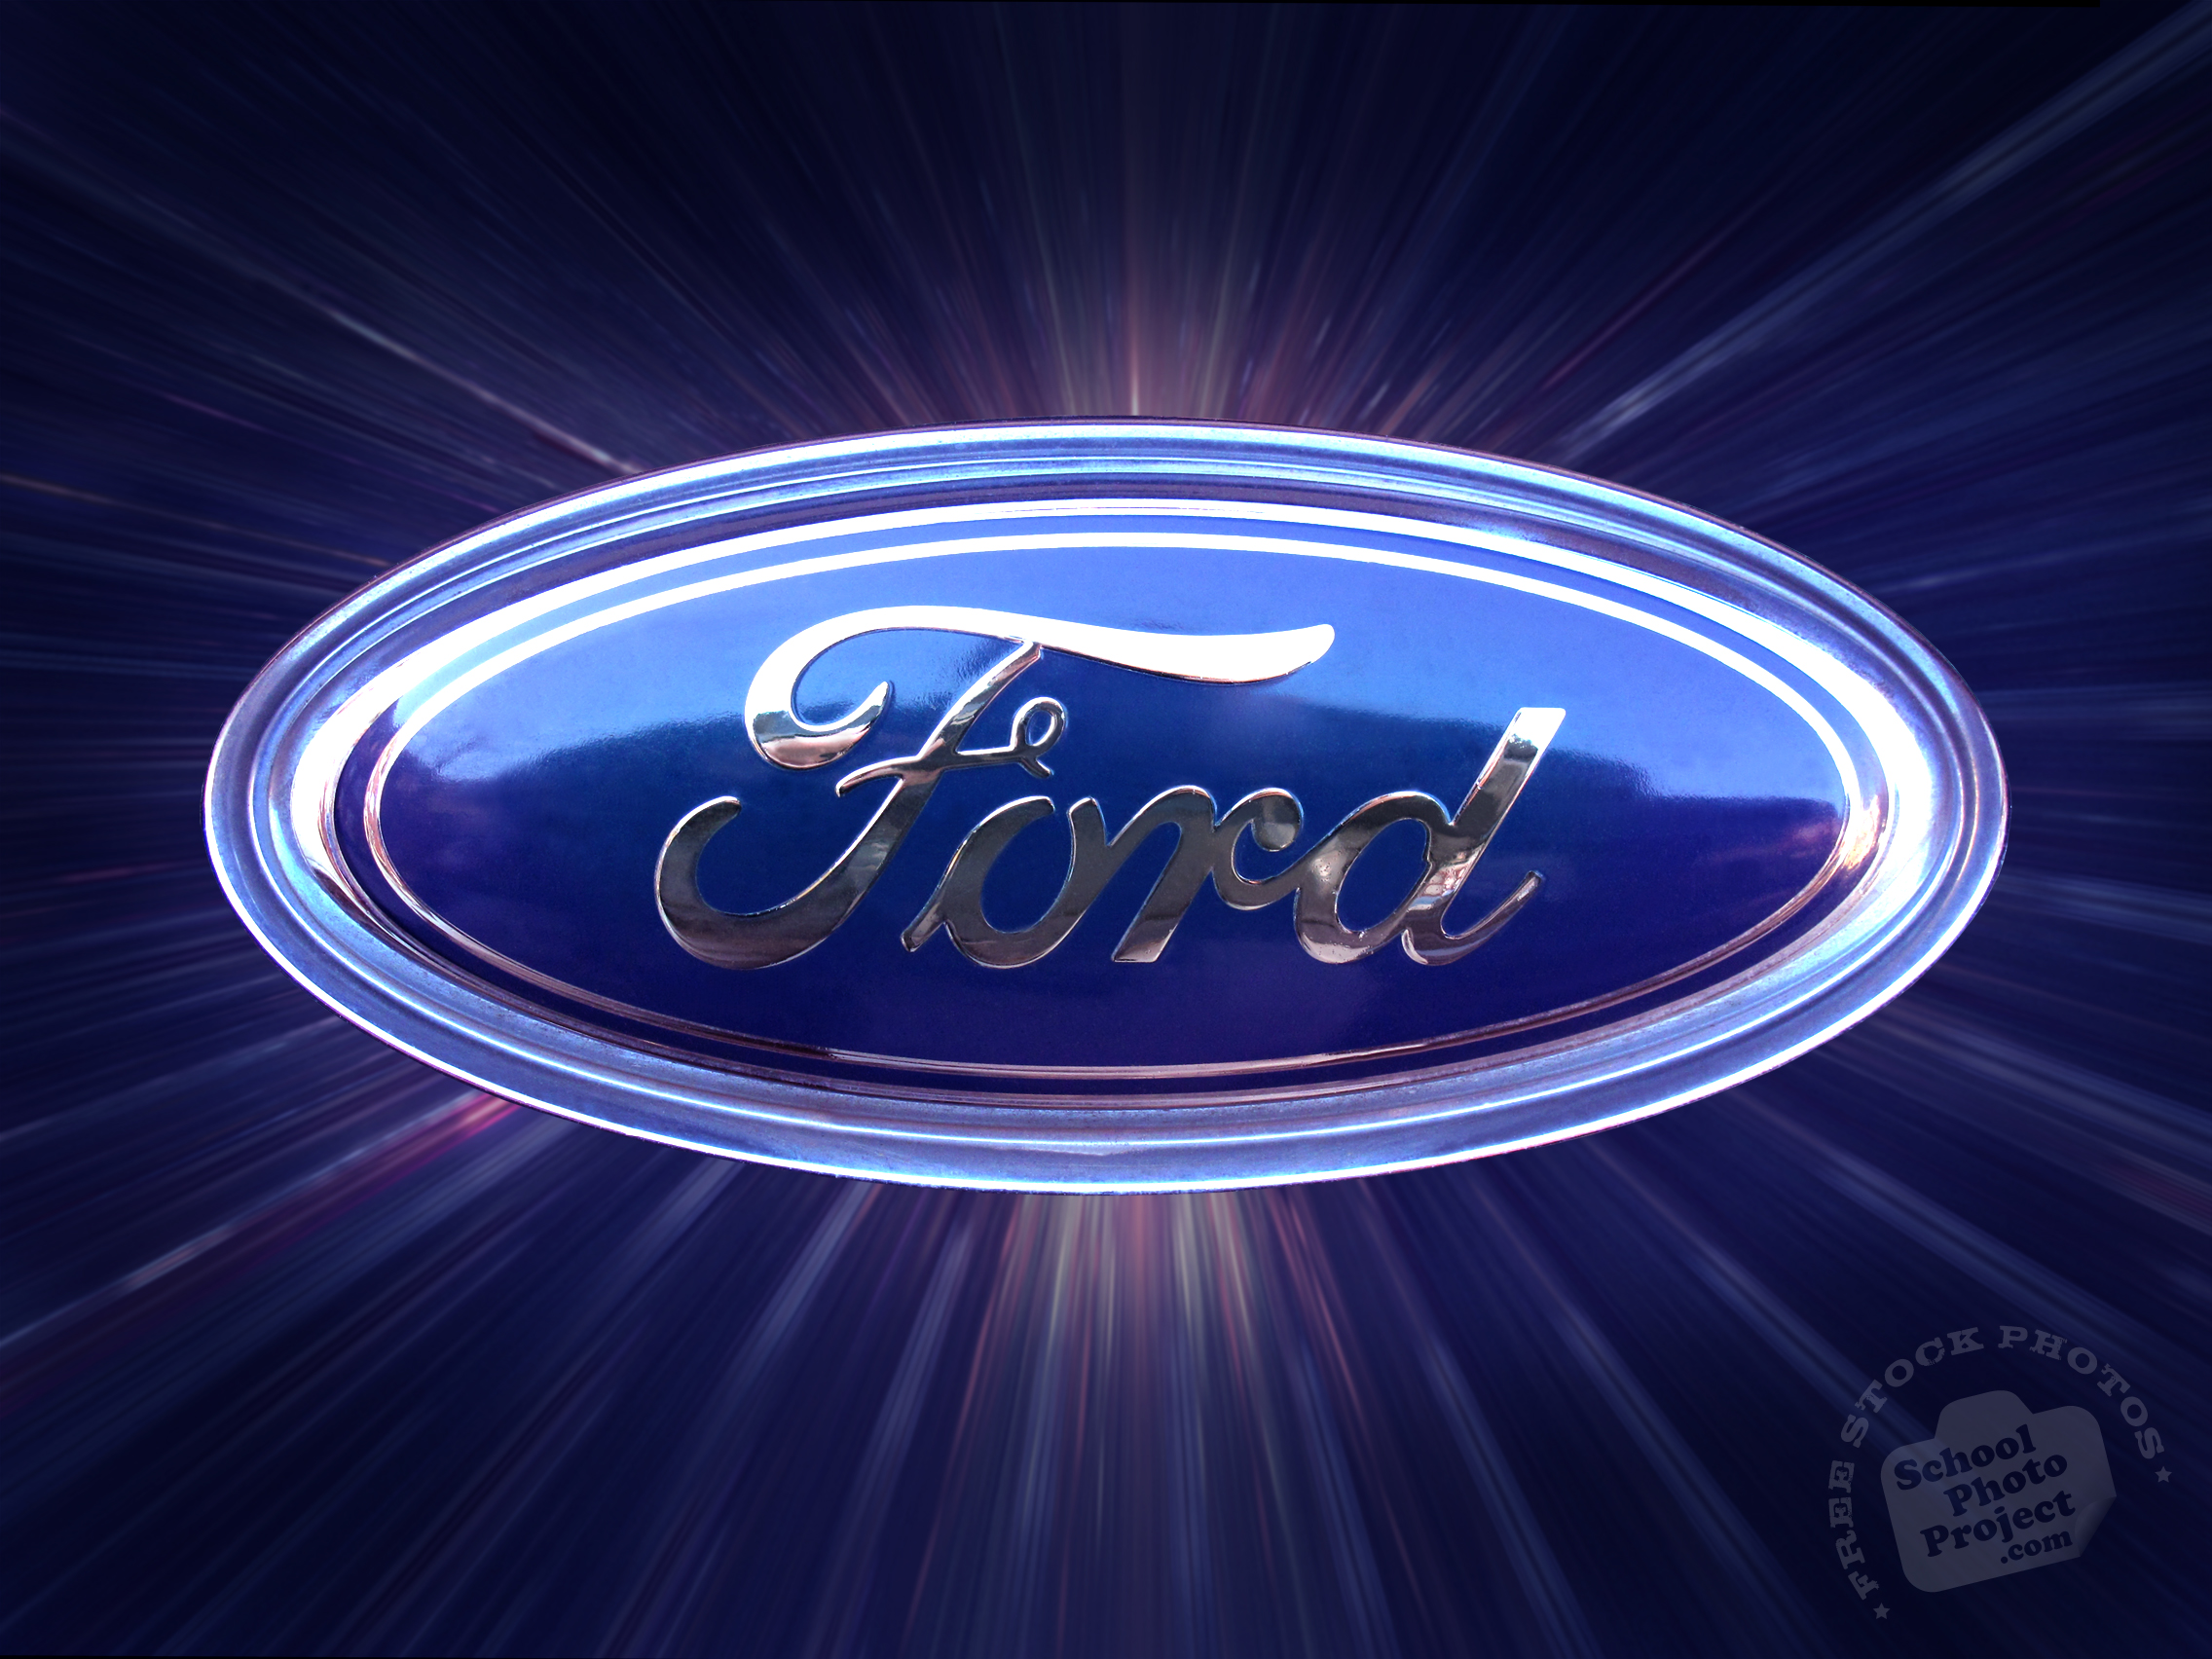 Логотип на заставку магнитолы. Эмблема Форд. Значок Форд фокус. Эмблема марки Форд. Красивый значок Форд.